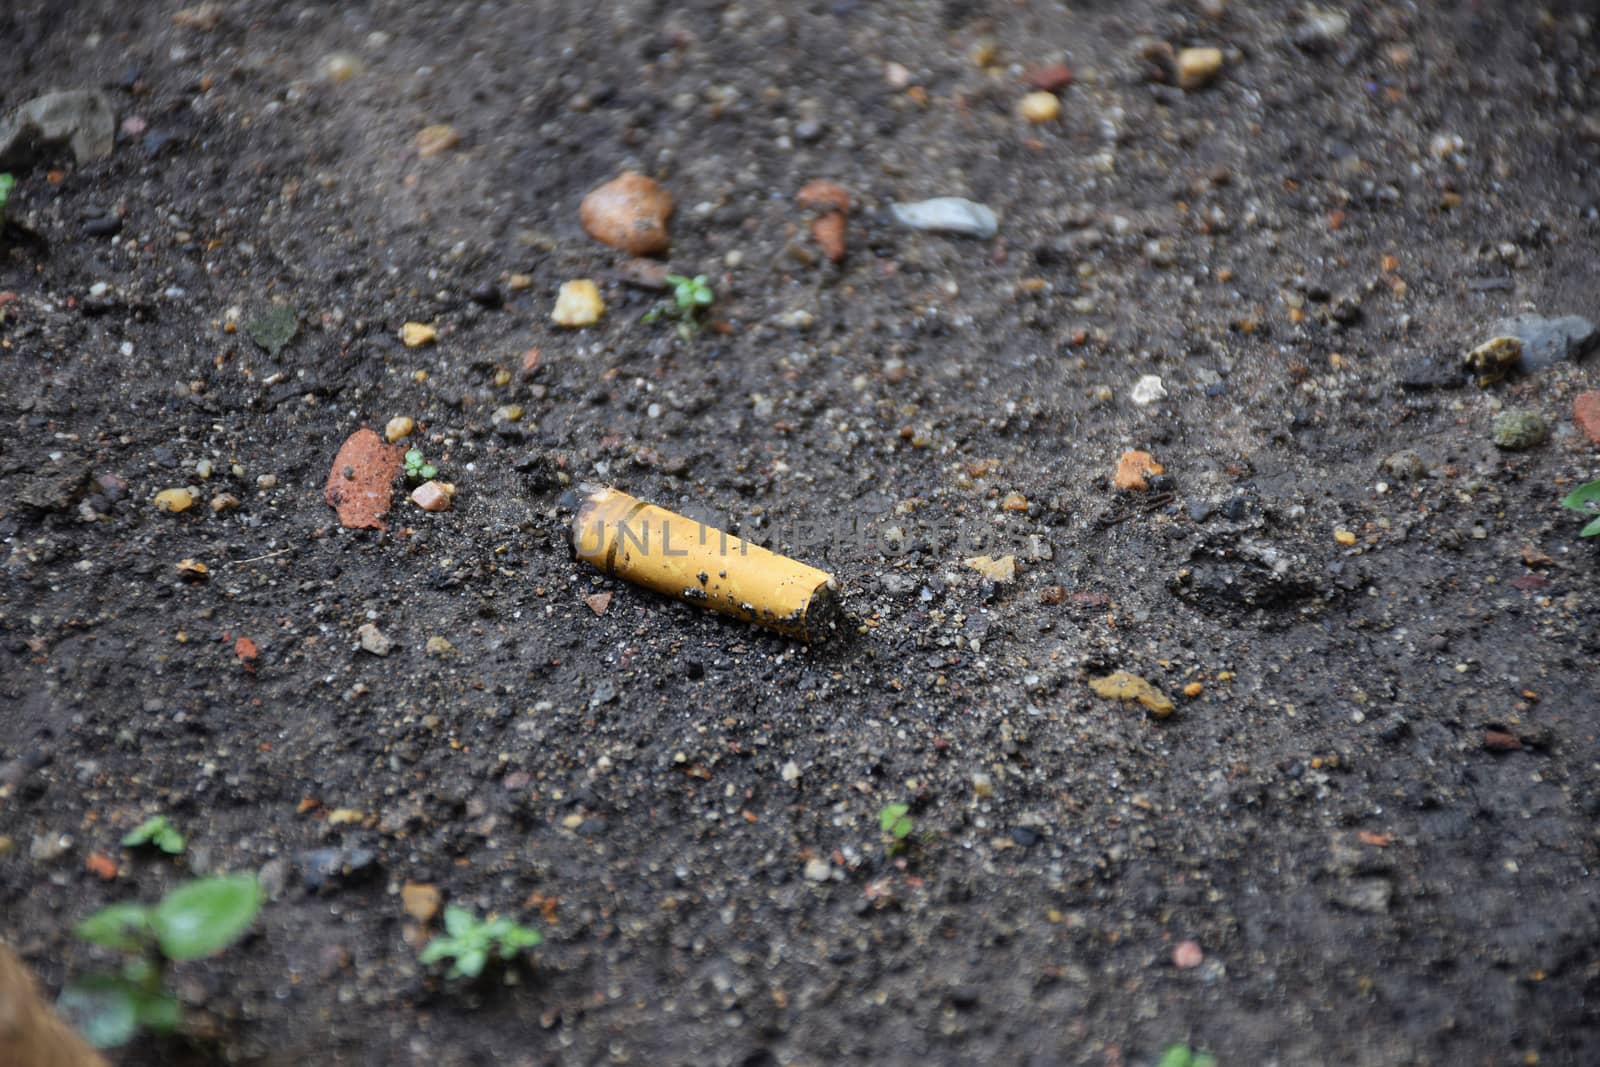 cigarette/trash on the ground.